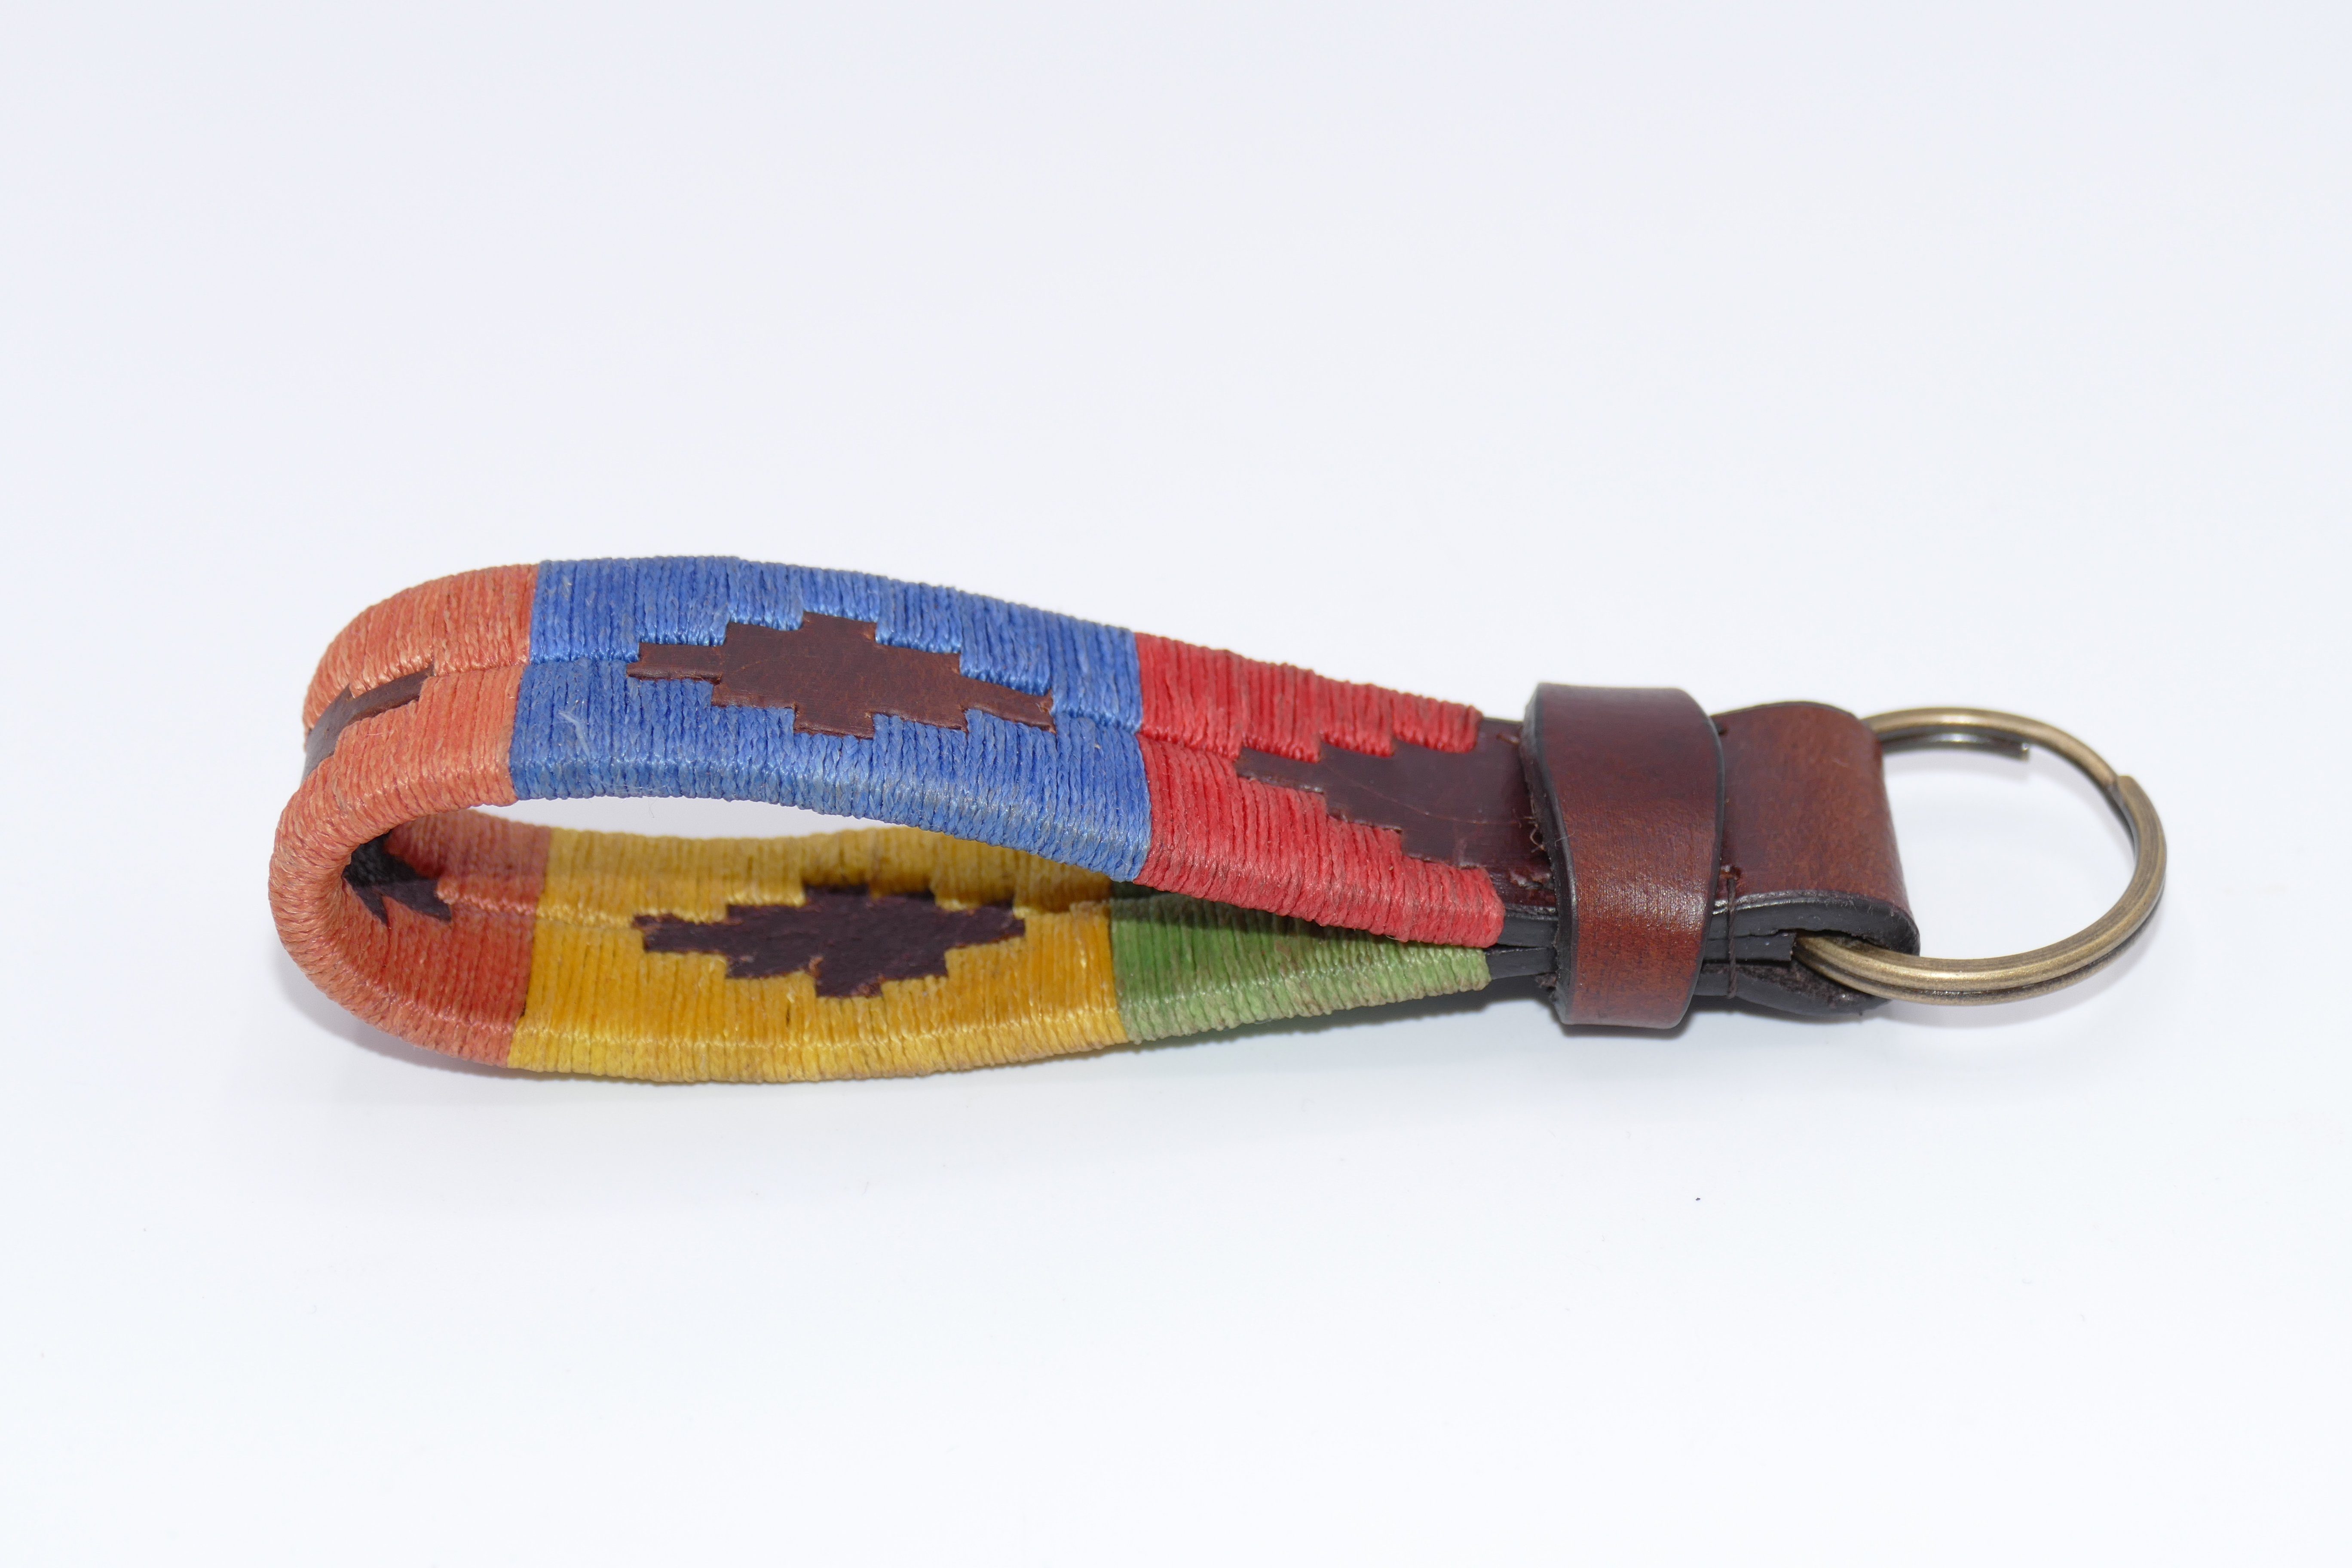 Kipita Schlüsselanhänger Hochwertig bestickter Polo Schlüsselanhänger, Argentinisches Design, echtes Leder, echtes Leder Rainbow